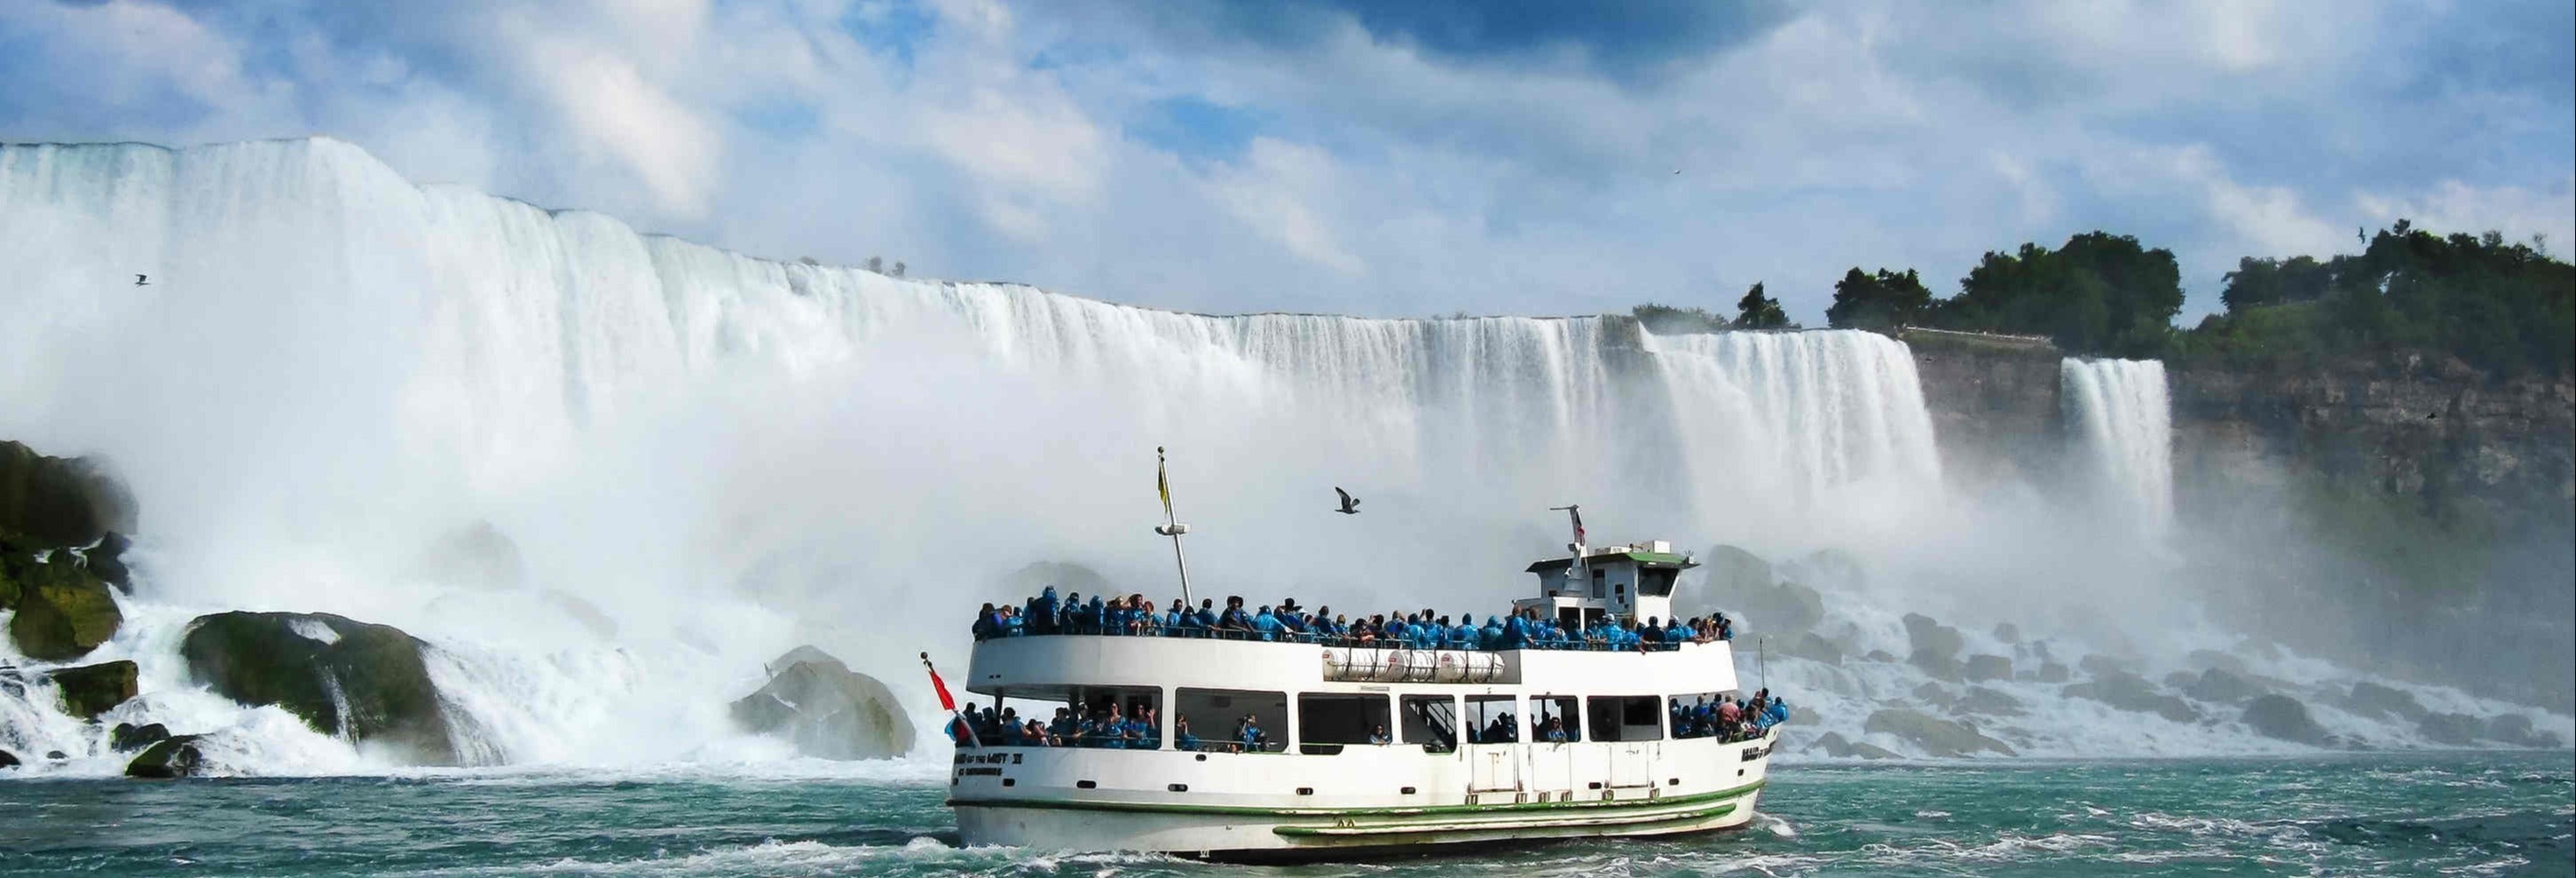 Niagara Falls Tour & Maid of the Mist Boat Trip